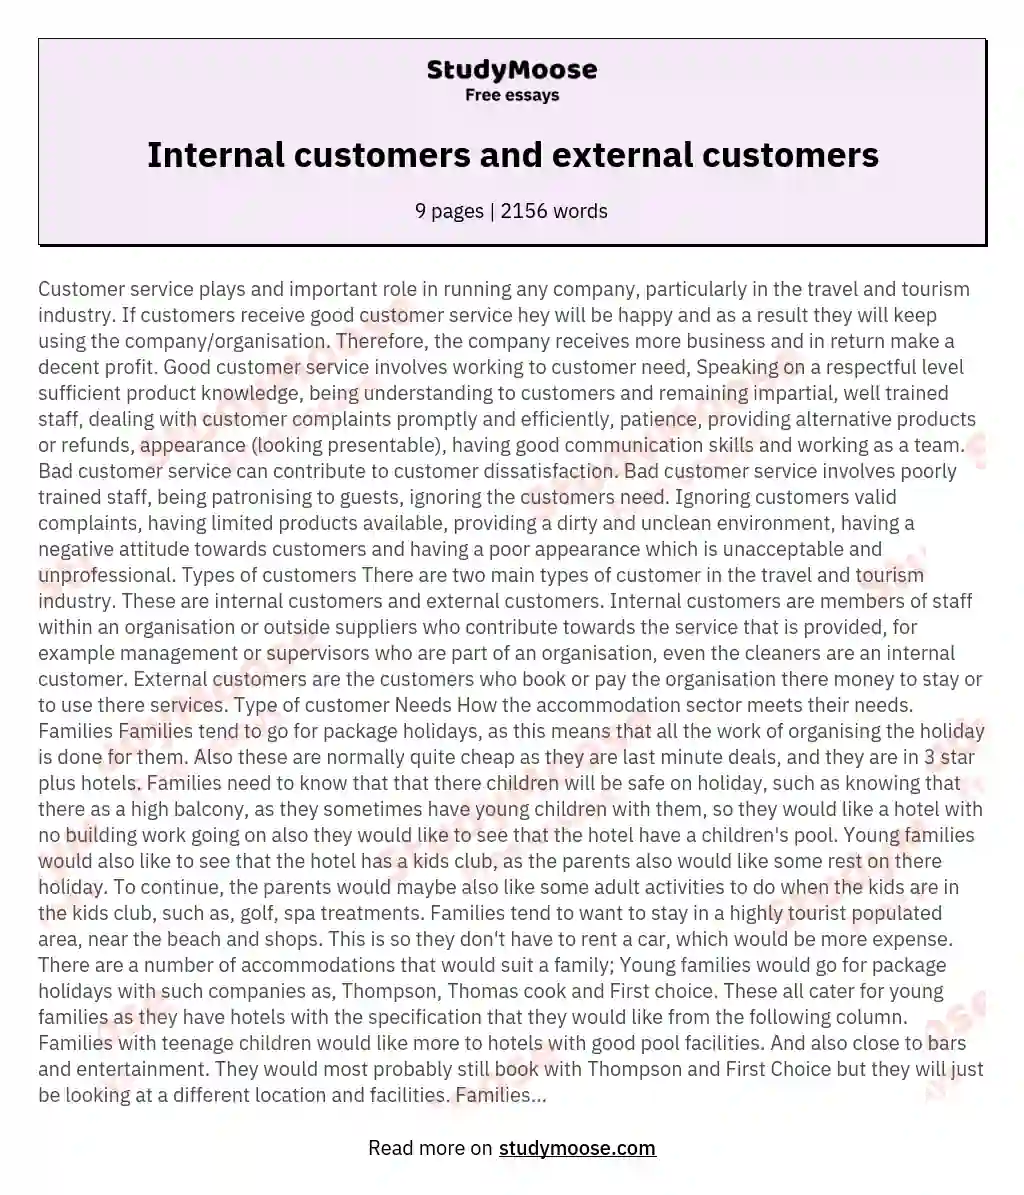 Internal customers and external customers